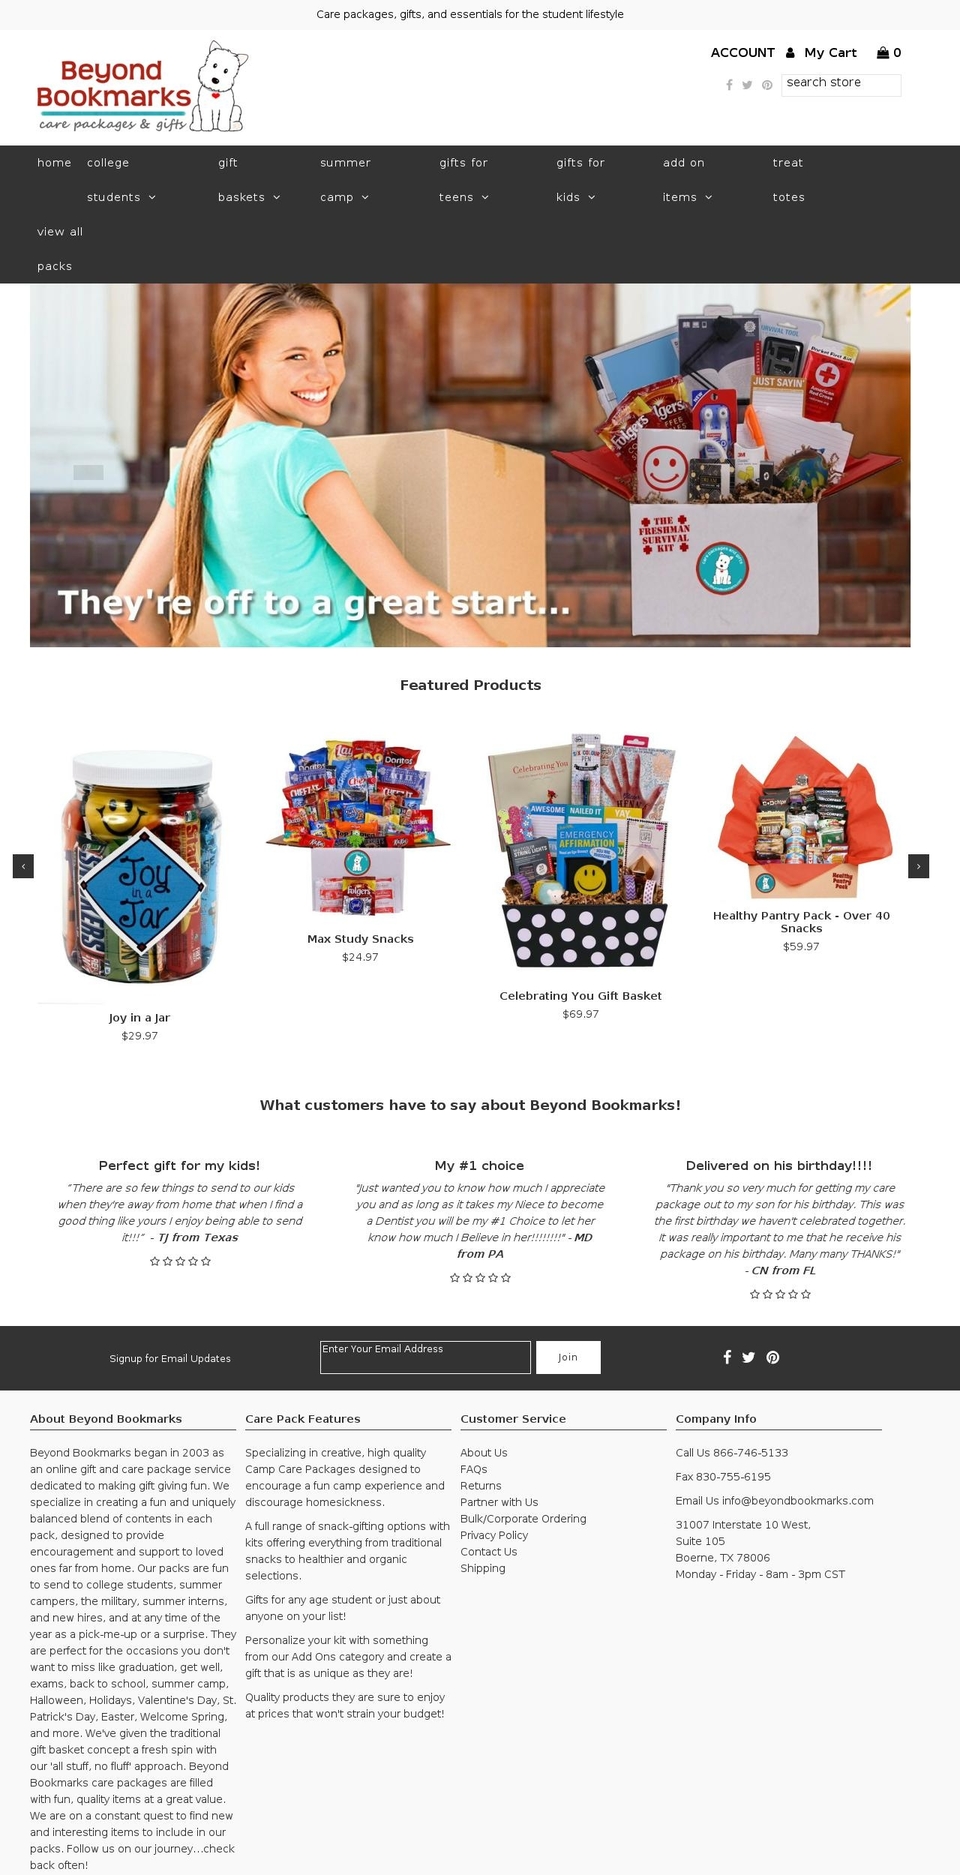 coolcarepackages.com shopify website screenshot